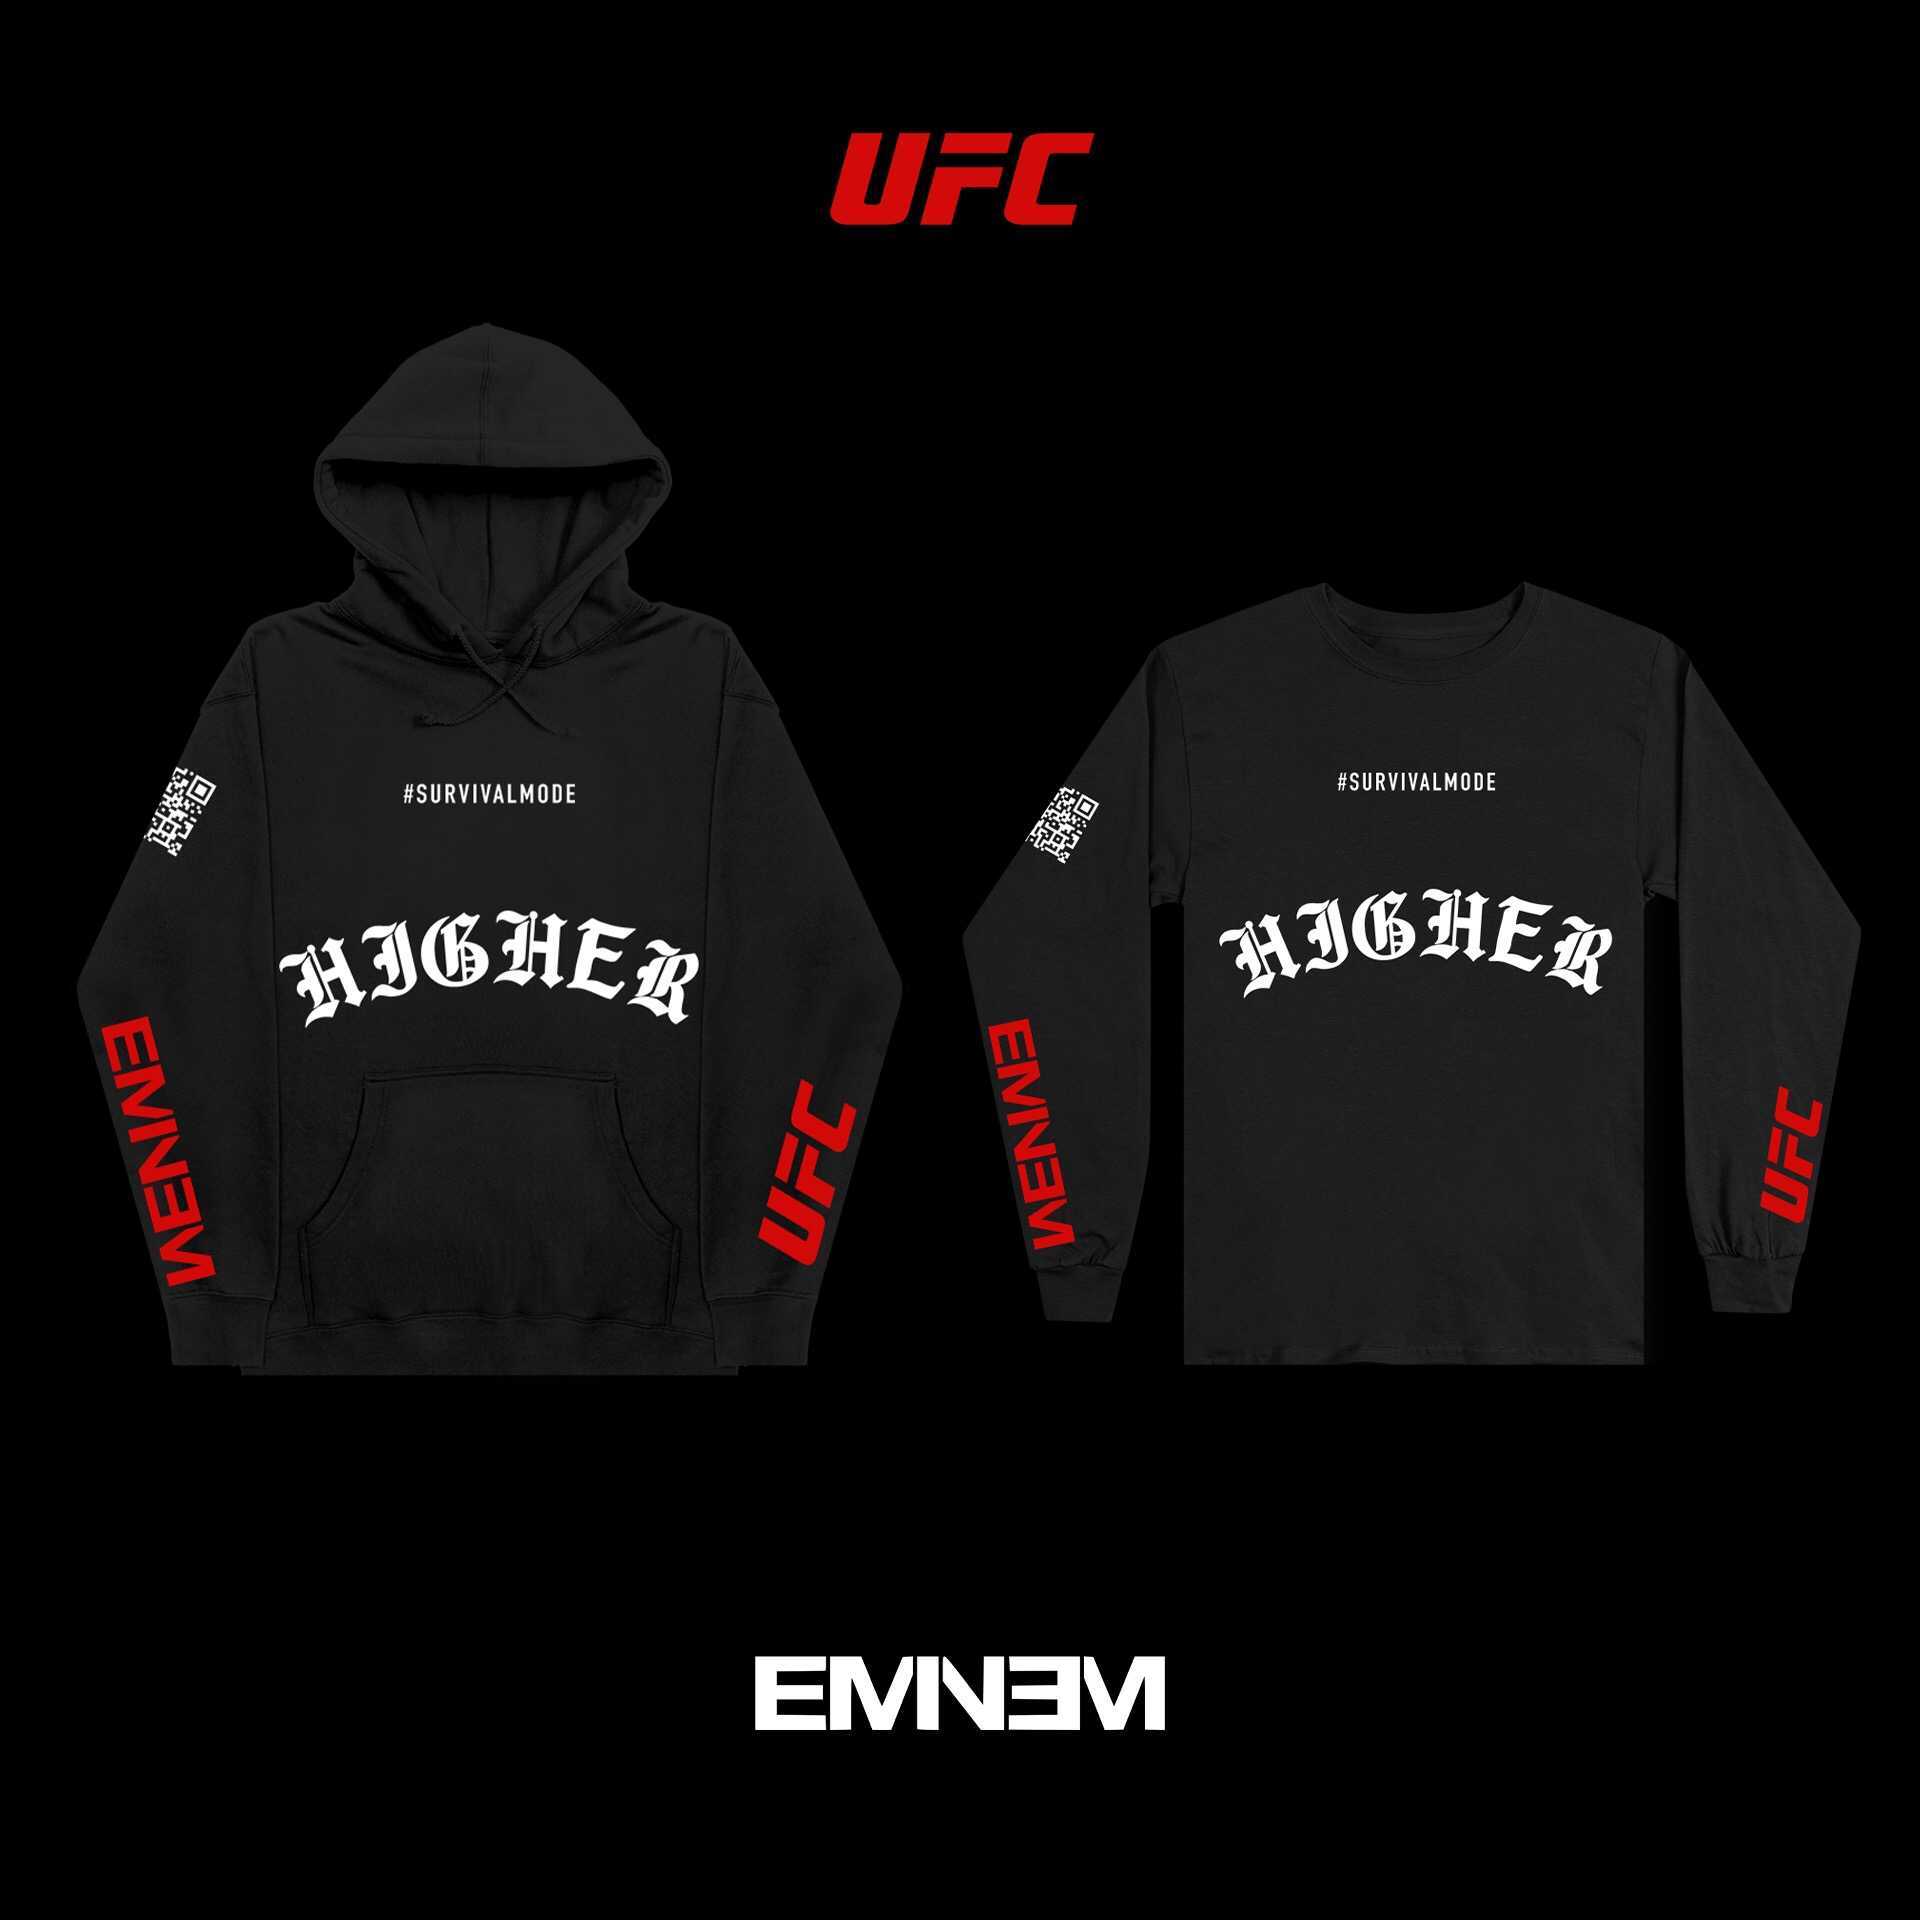 Shop Now: UFC X EMINEM “Higher” Limited Edition Collab